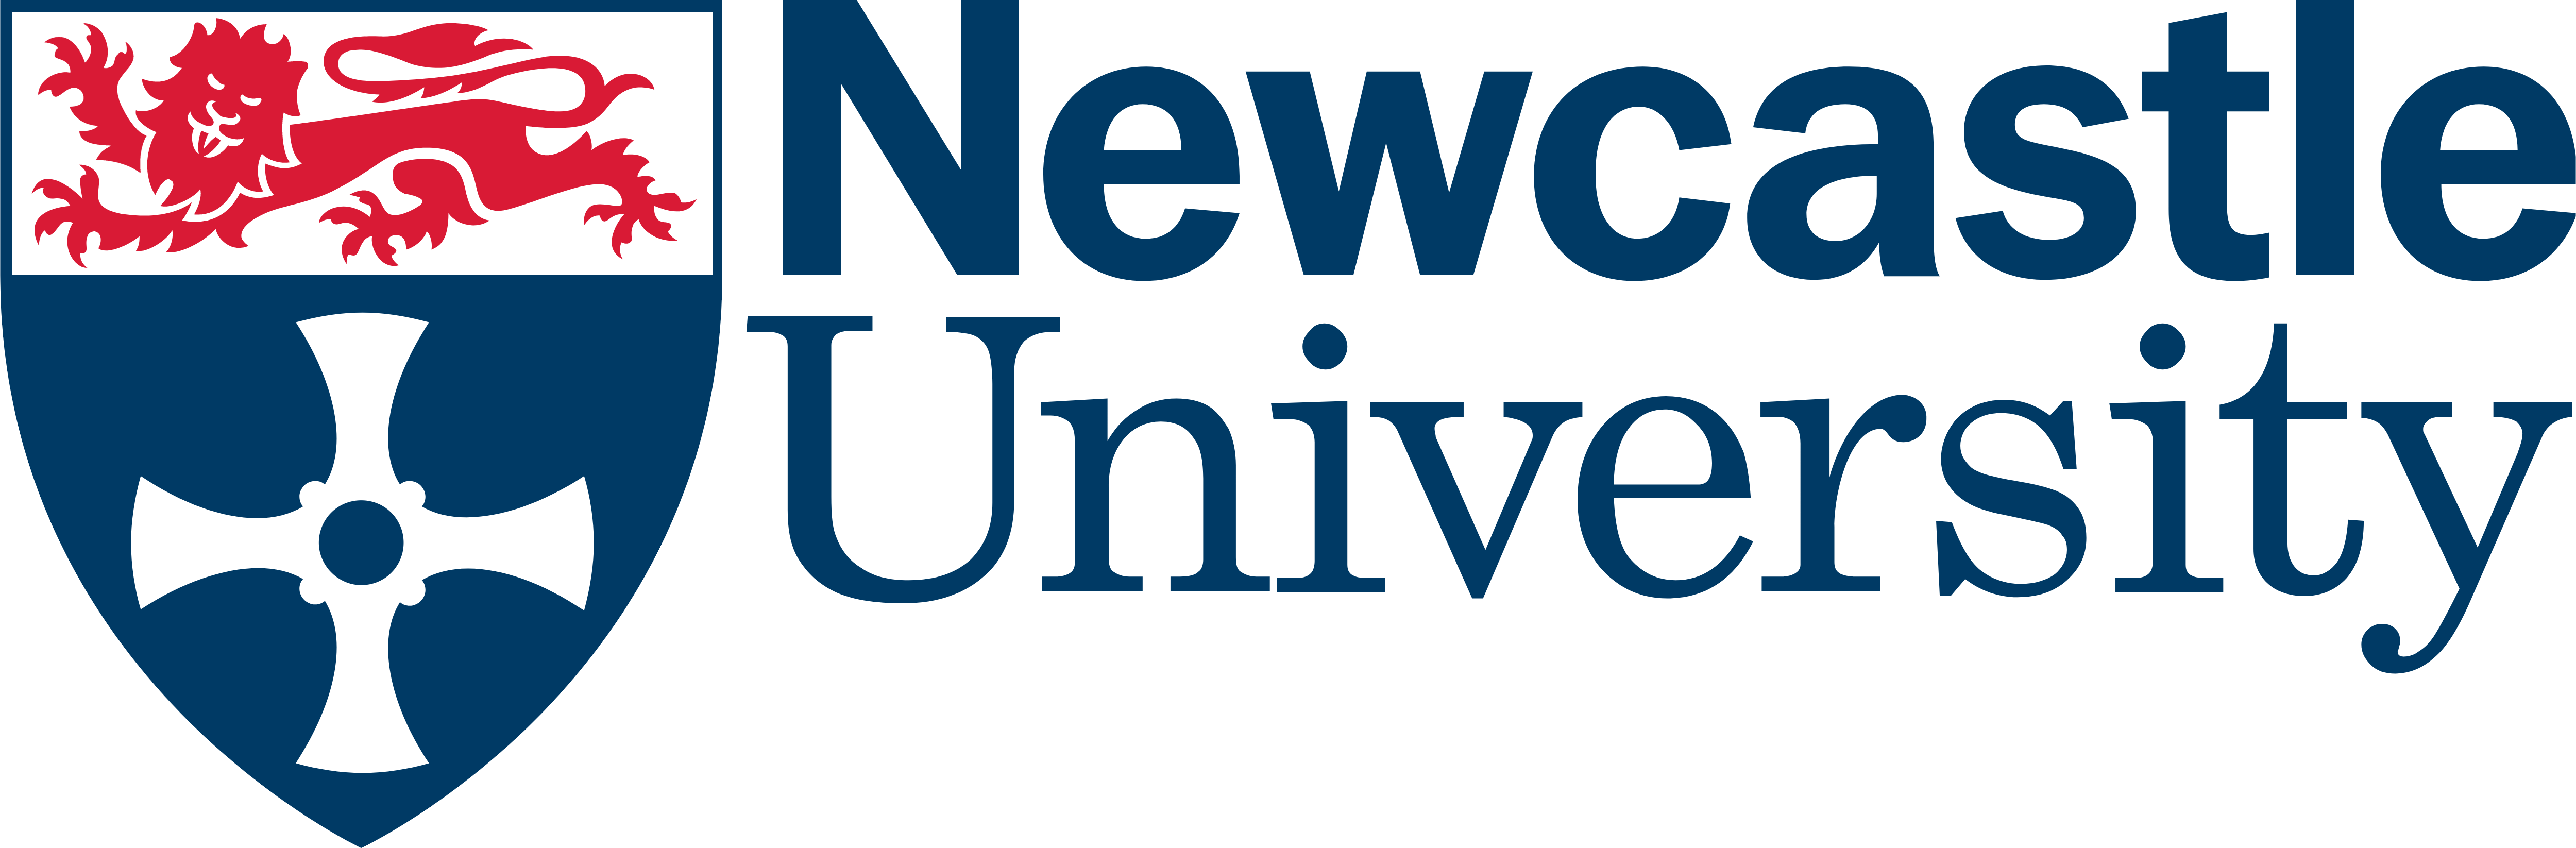 Newcastle_University_logo